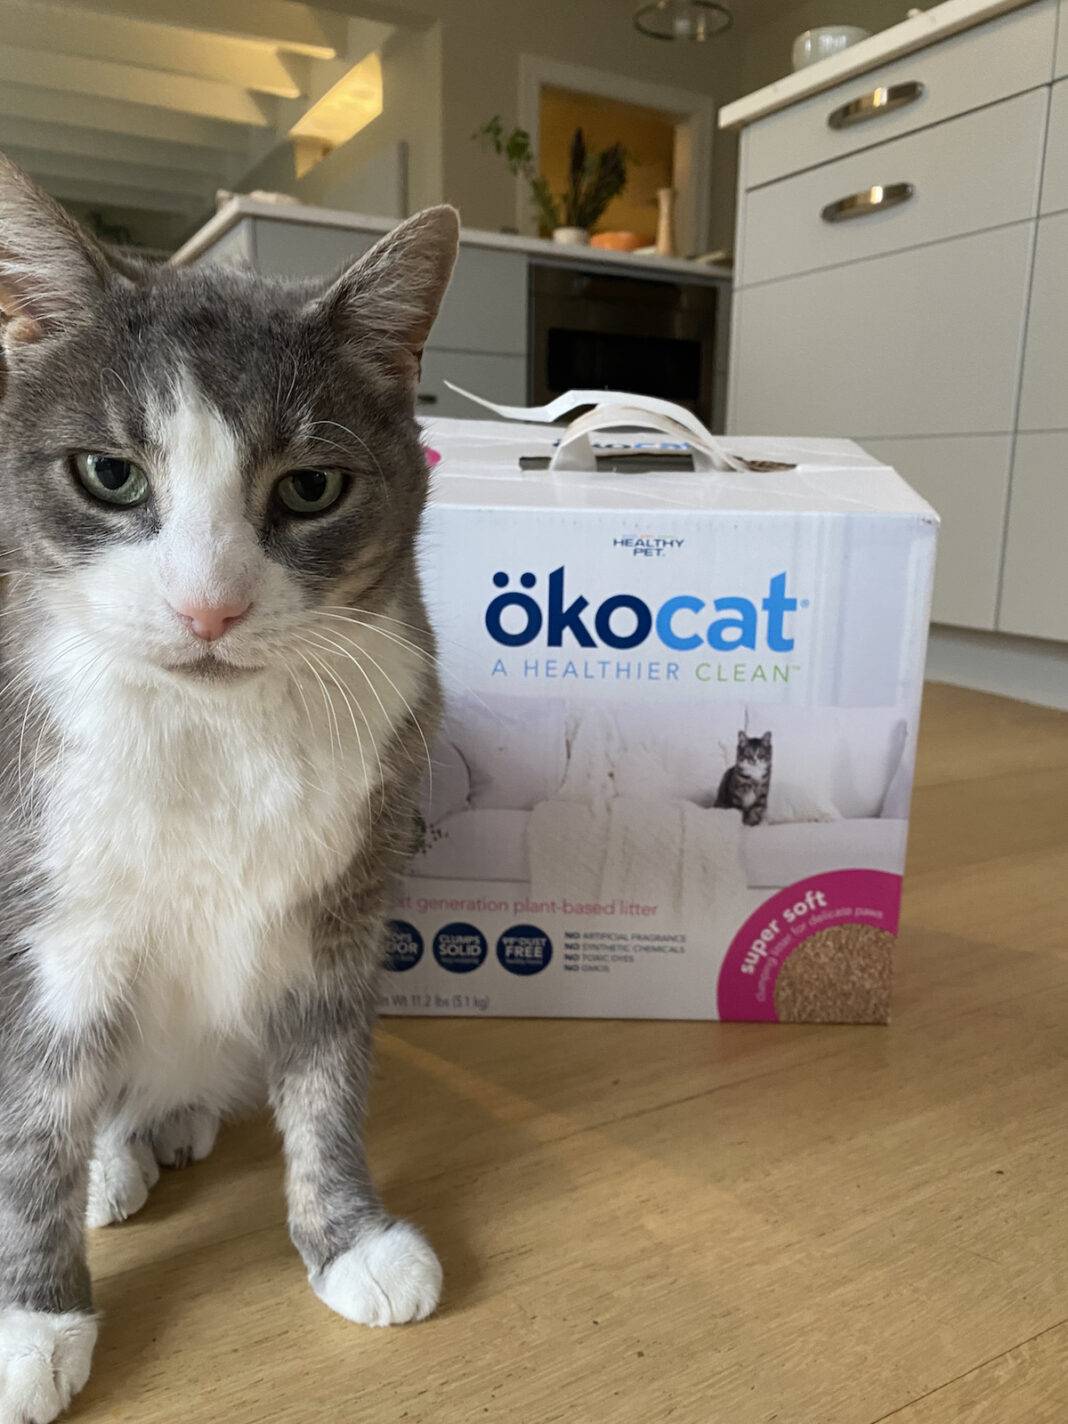 Oscar the cat with ökocat litter.